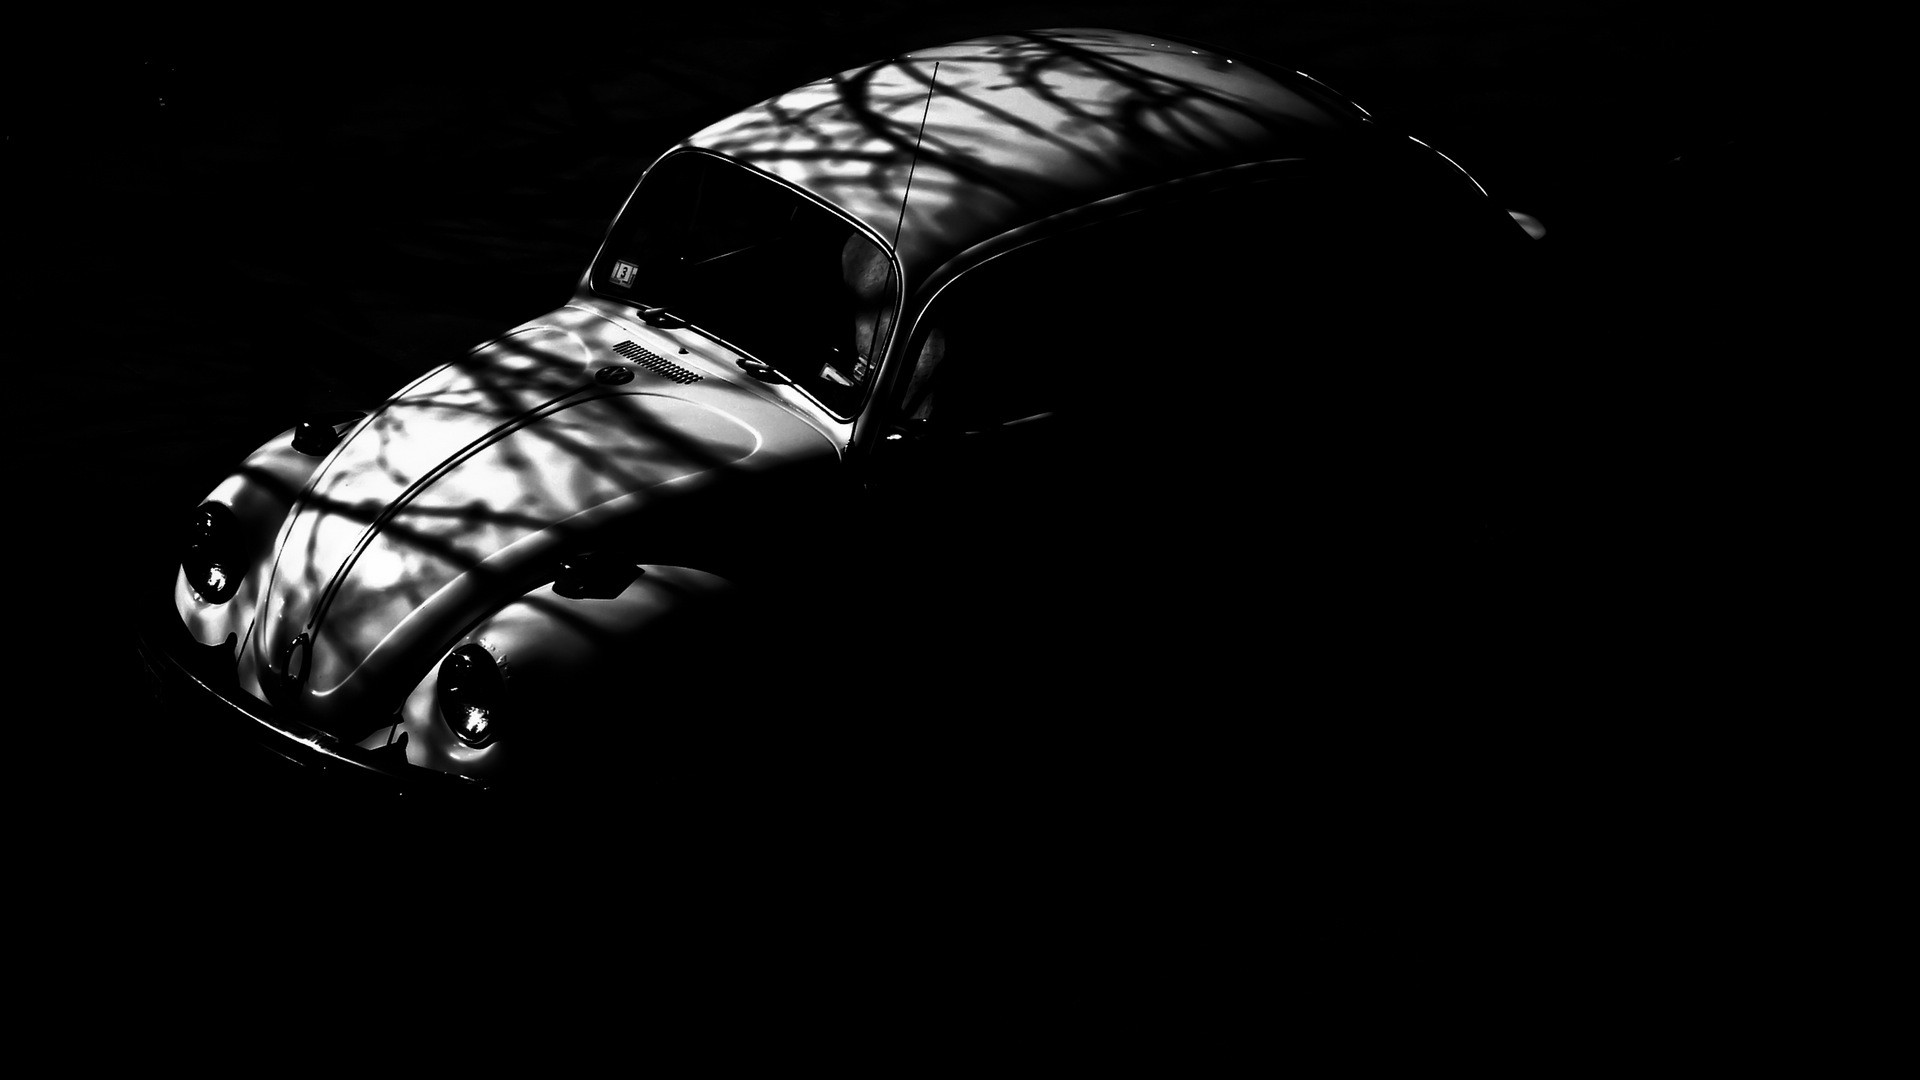 General 1920x1080 vehicle car Volkswagen Beetle shadow monochrome vintage classic car German cars Volkswagen Group